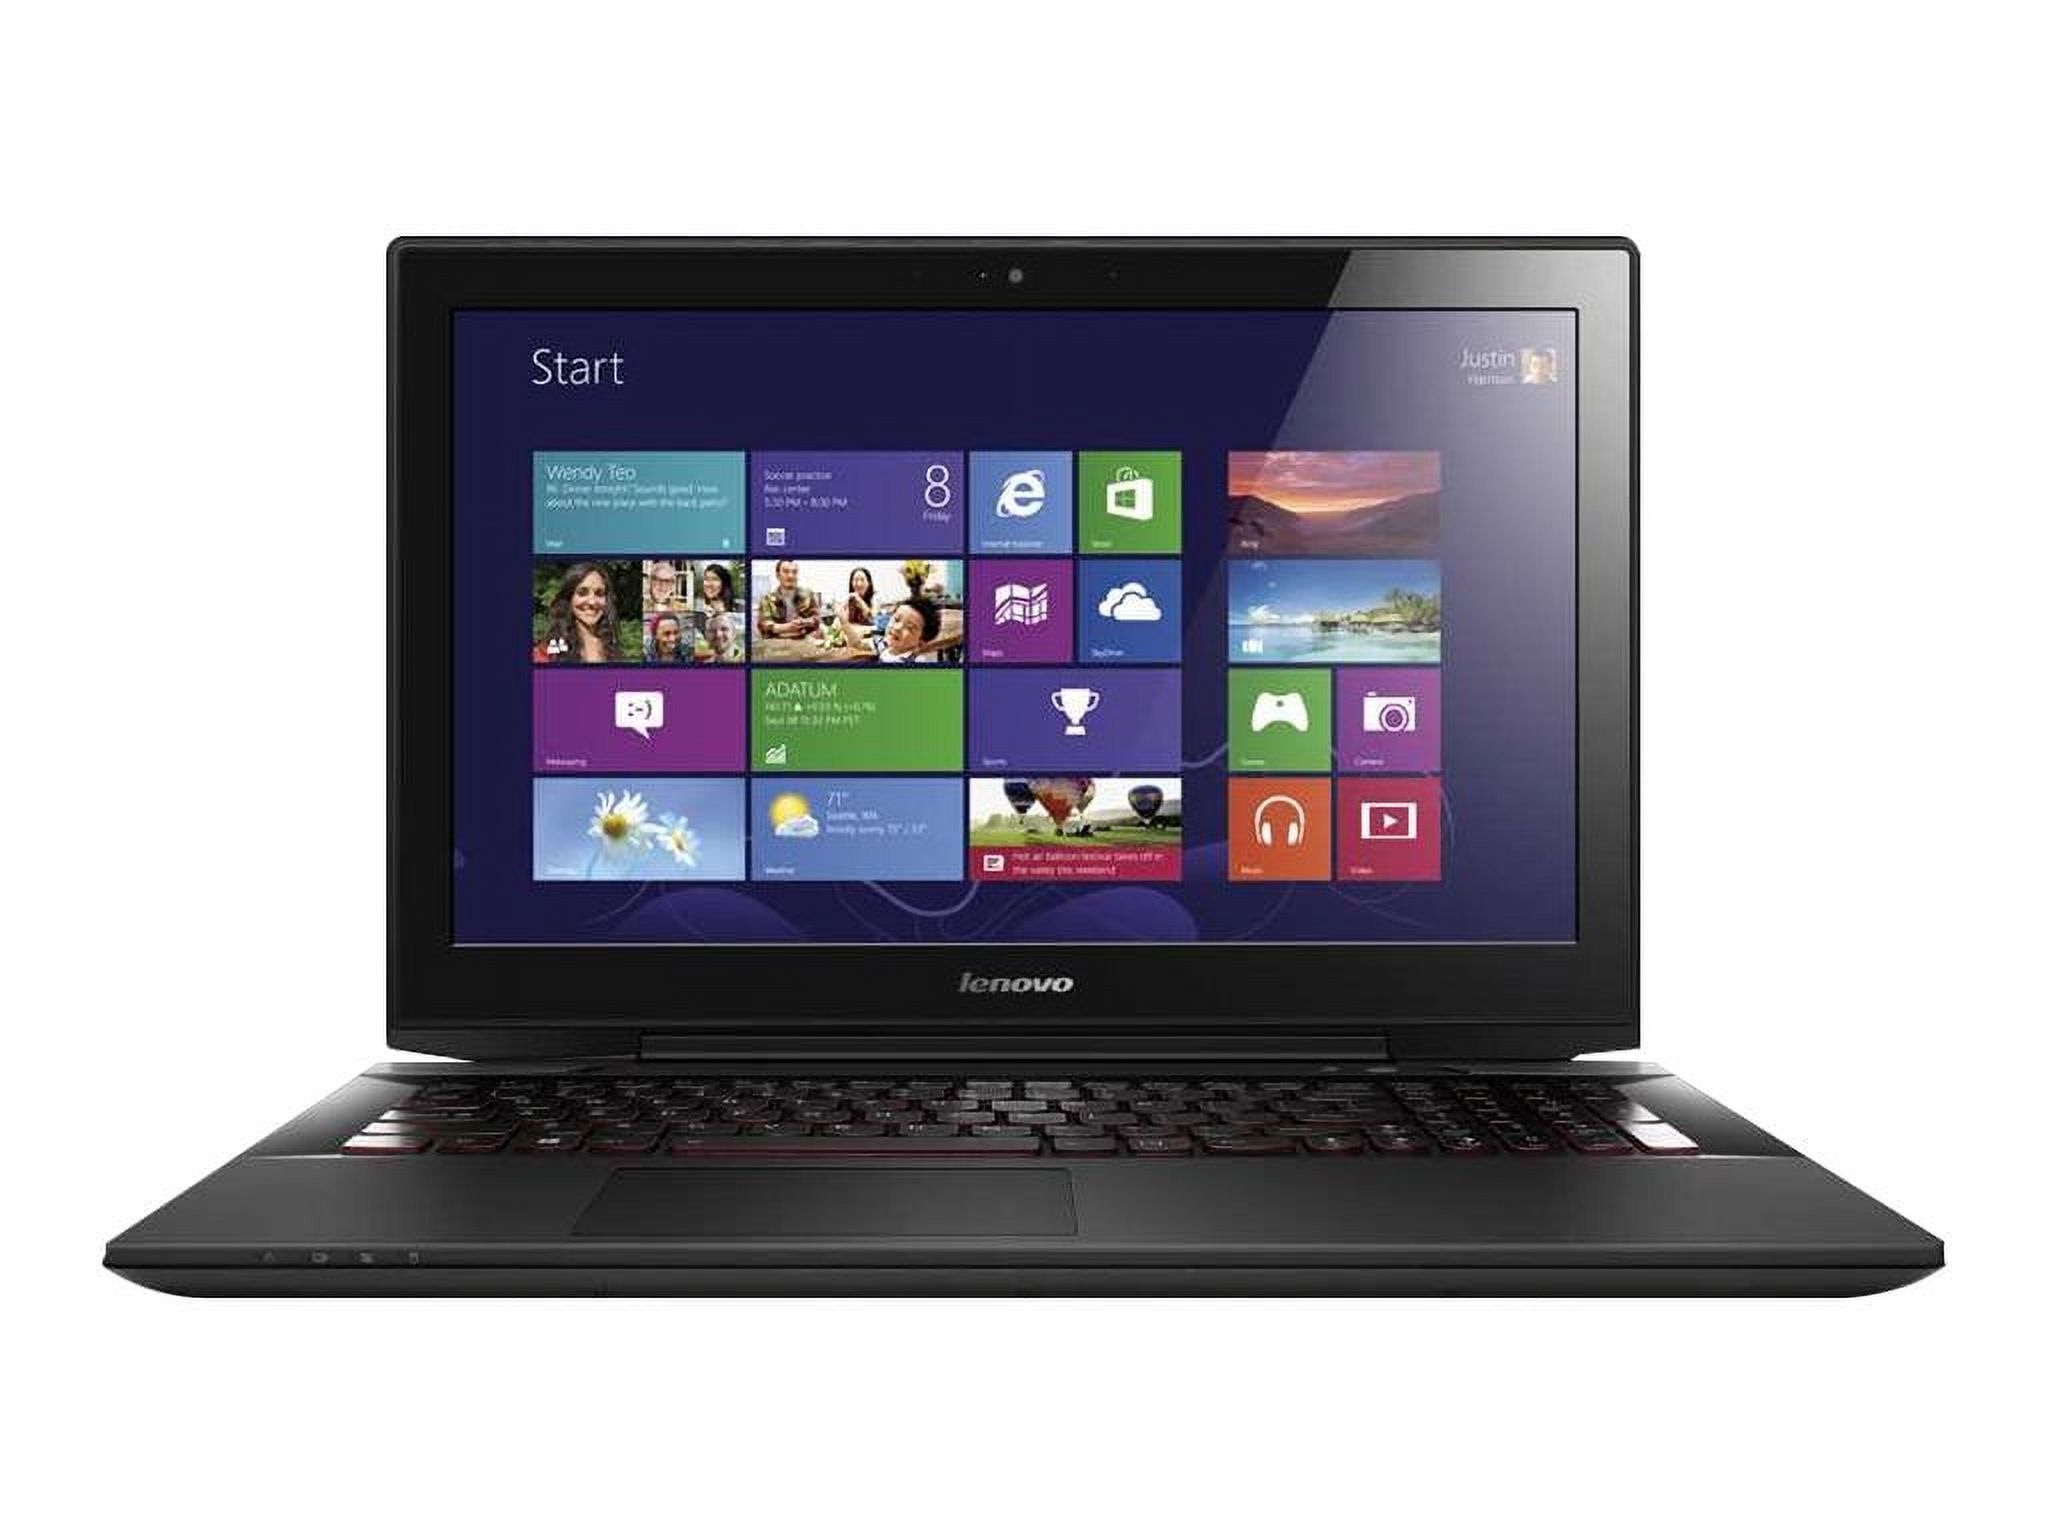 Recertified Lenovo Y50-70 15.6" FHD Gaming Laptop ( Intel Core i7-4720HQ 2.60GHz, 8GB Ram, 500GB HD, GeForce GTX 860M 2GB, Windows 10 Home ) Grade A - image 1 of 9